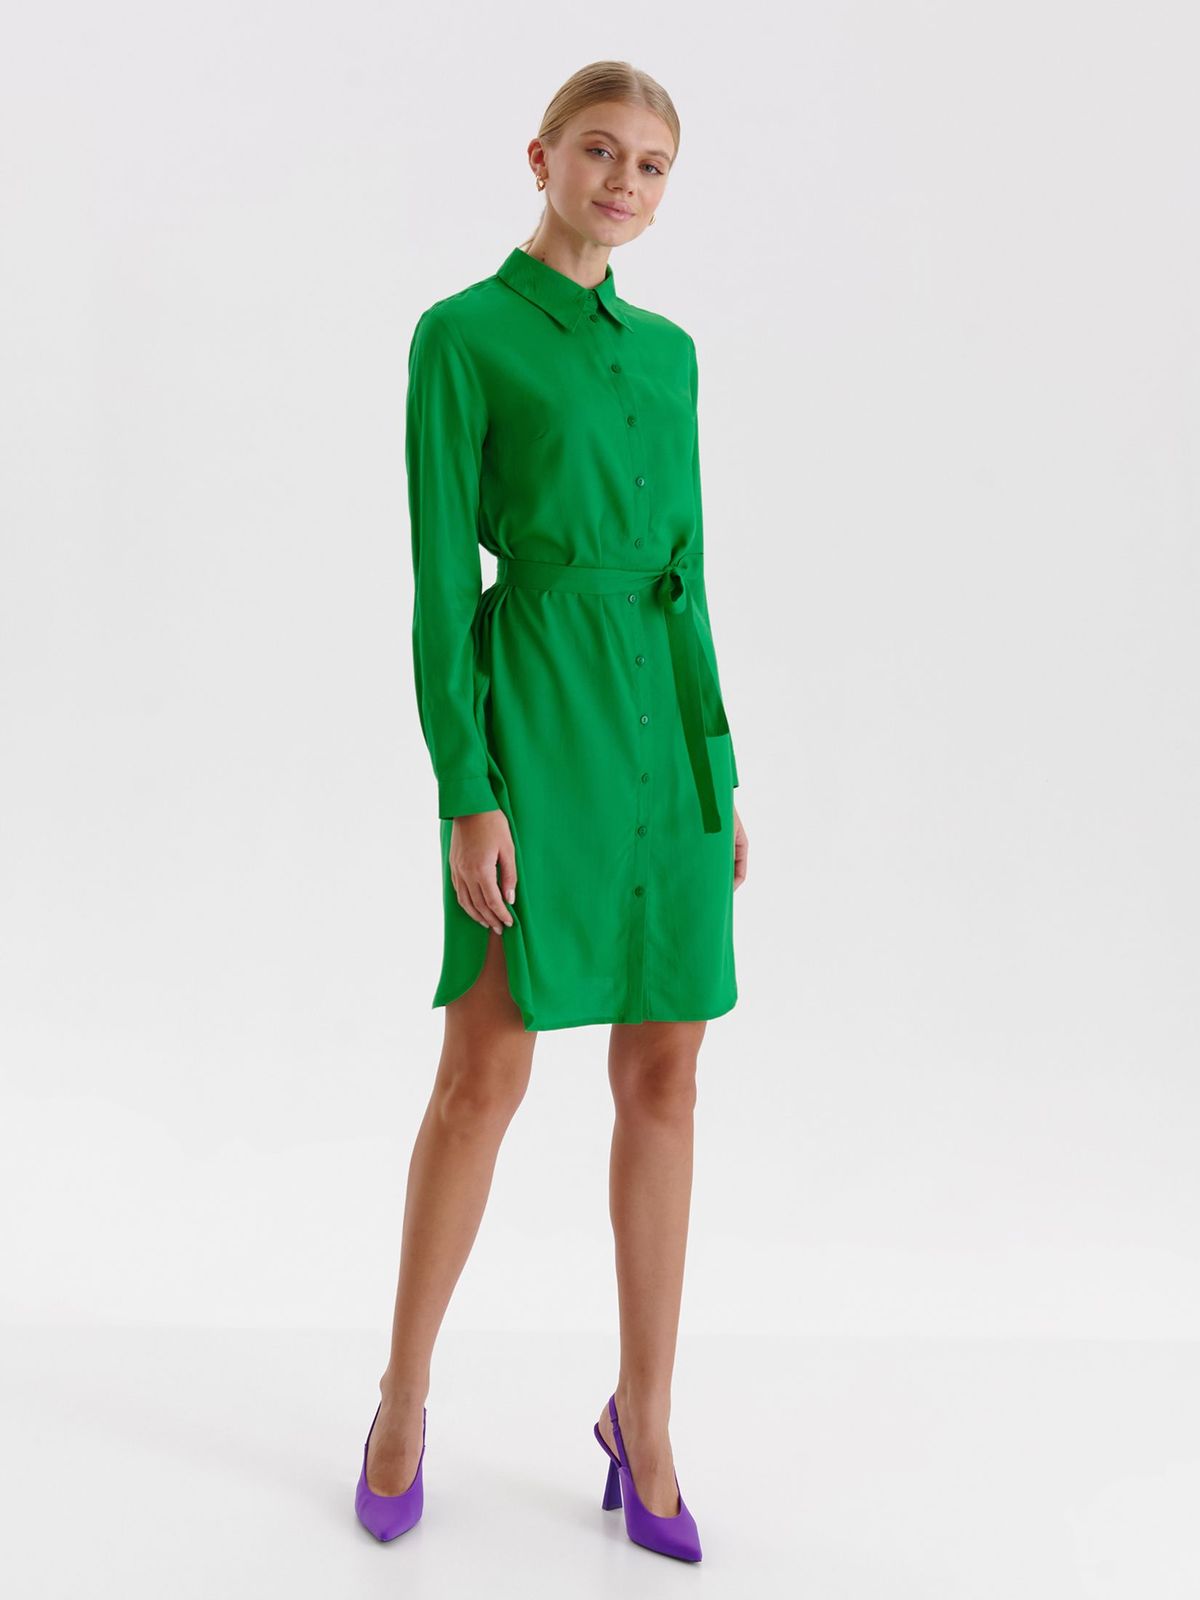 Green dress loose fit shirt dress thin fabric